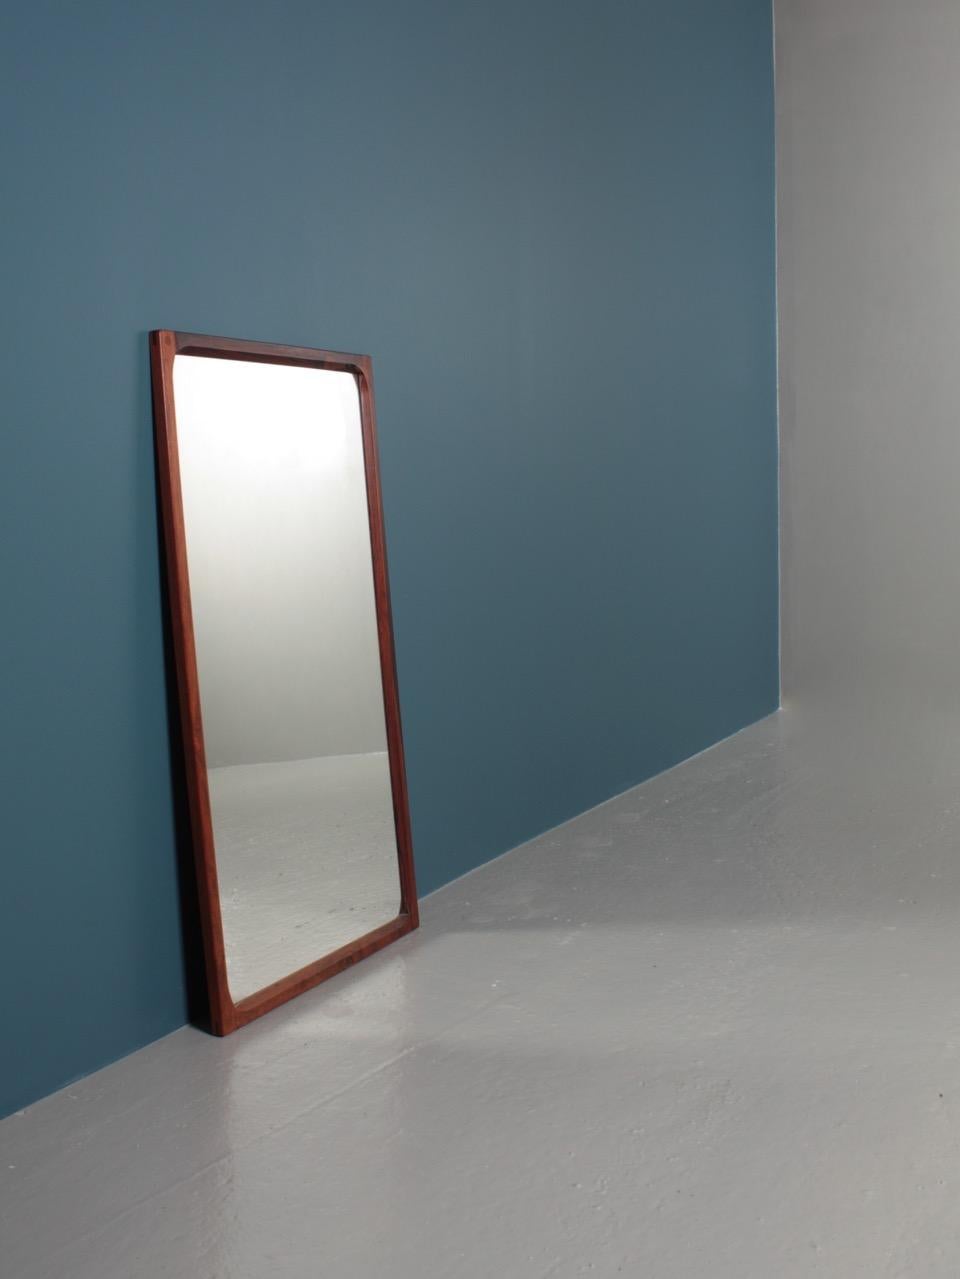 Midcentury Wall Mirror in Rosewood by Aksel Kjersgaard, Danish Modern, 1960s For Sale 3